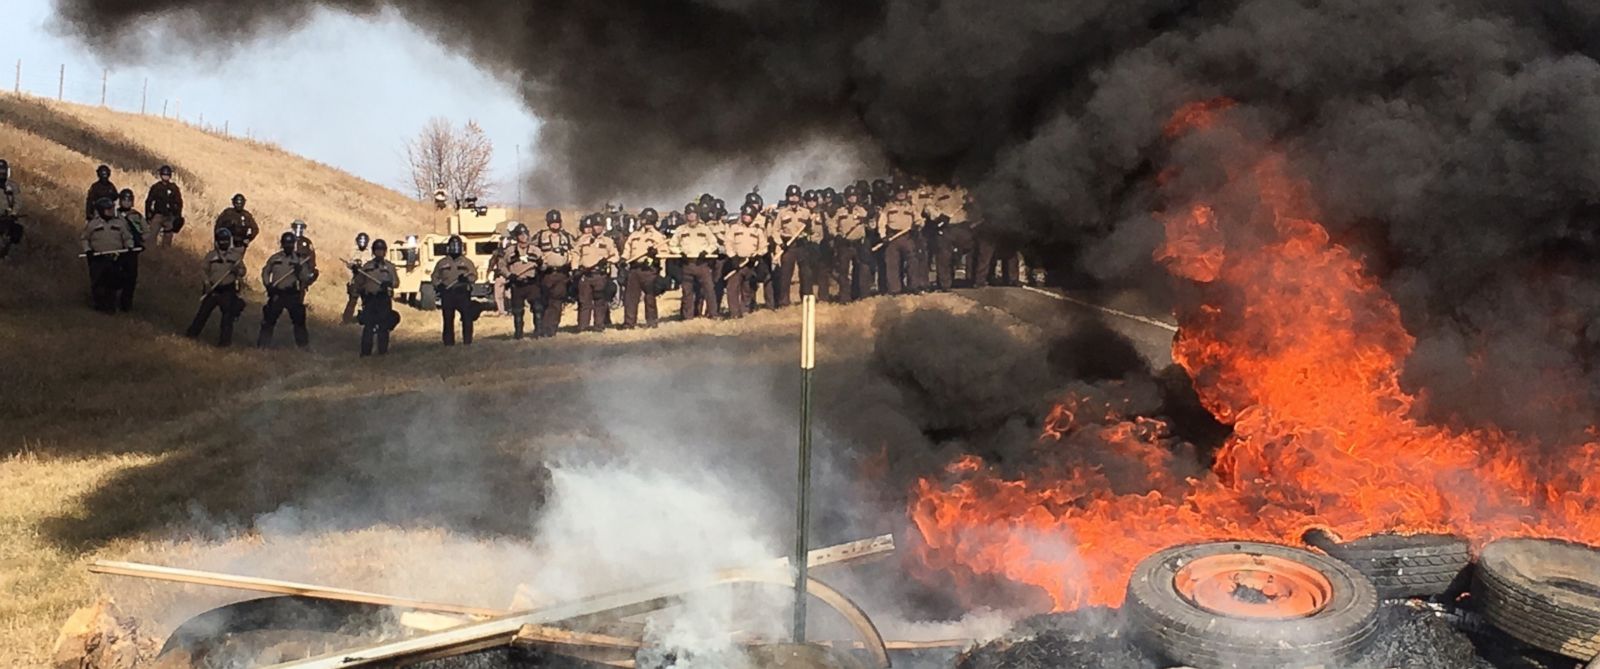 Image result for north dakota pipeline protest images